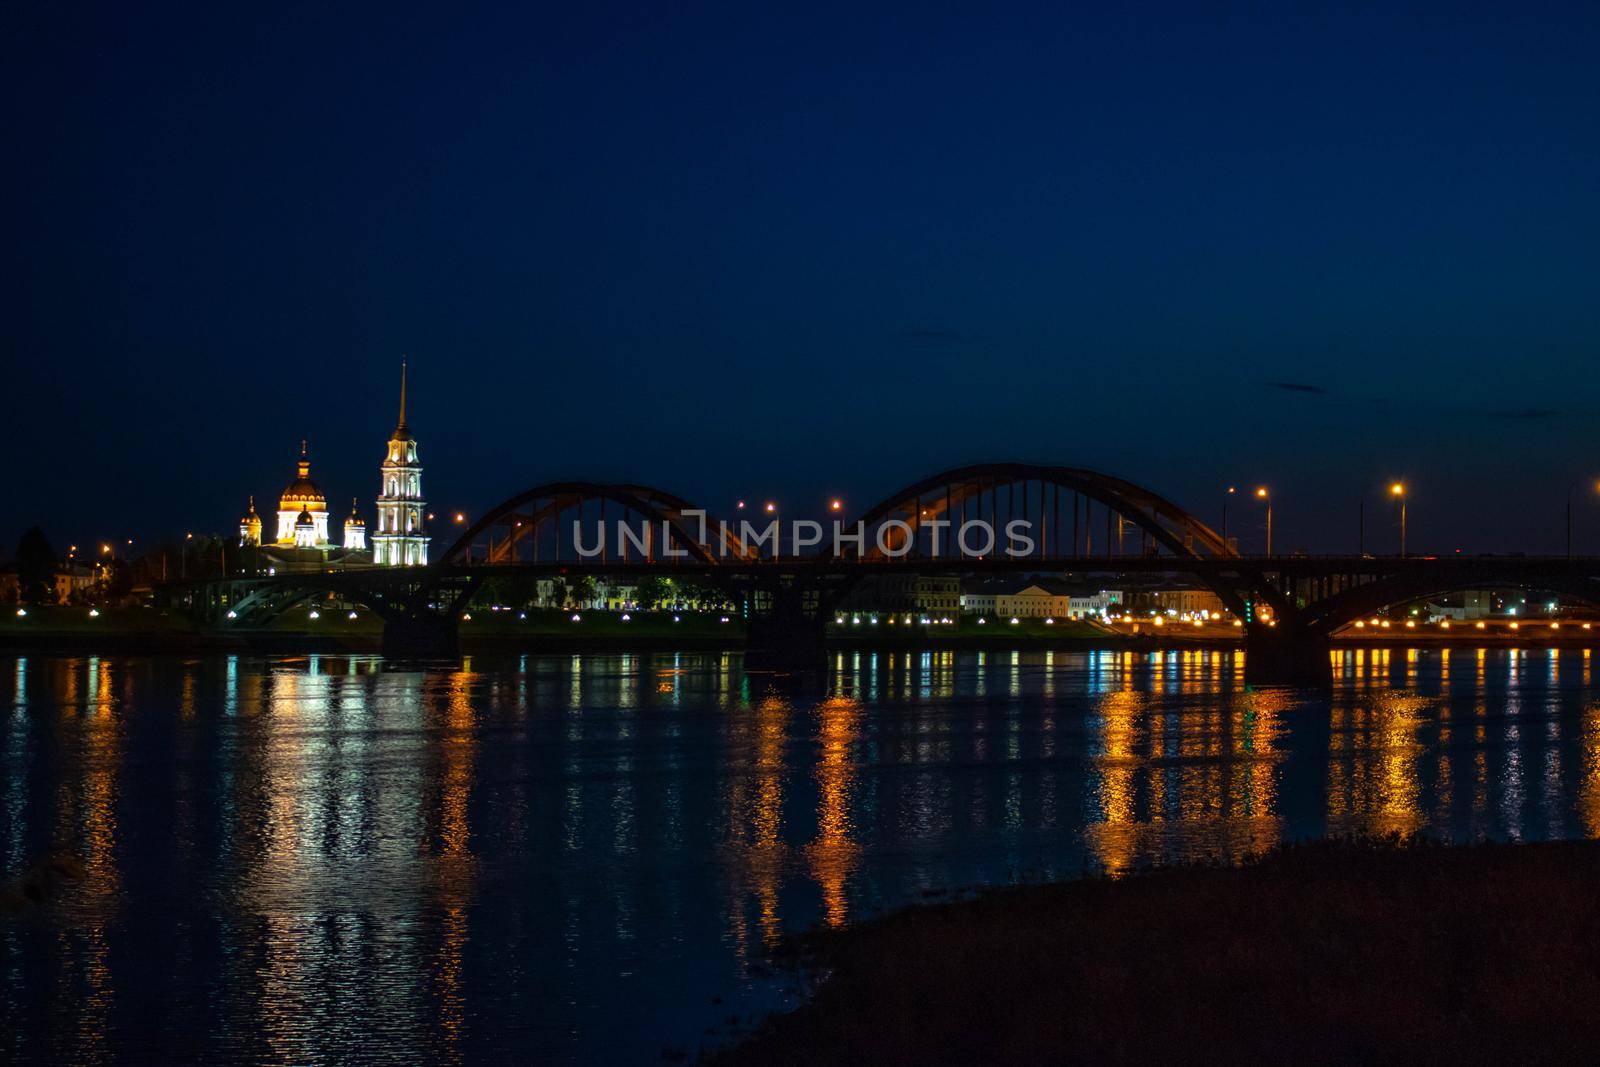 Bridge across the river at night in Rybinsk Russia by lapushka62